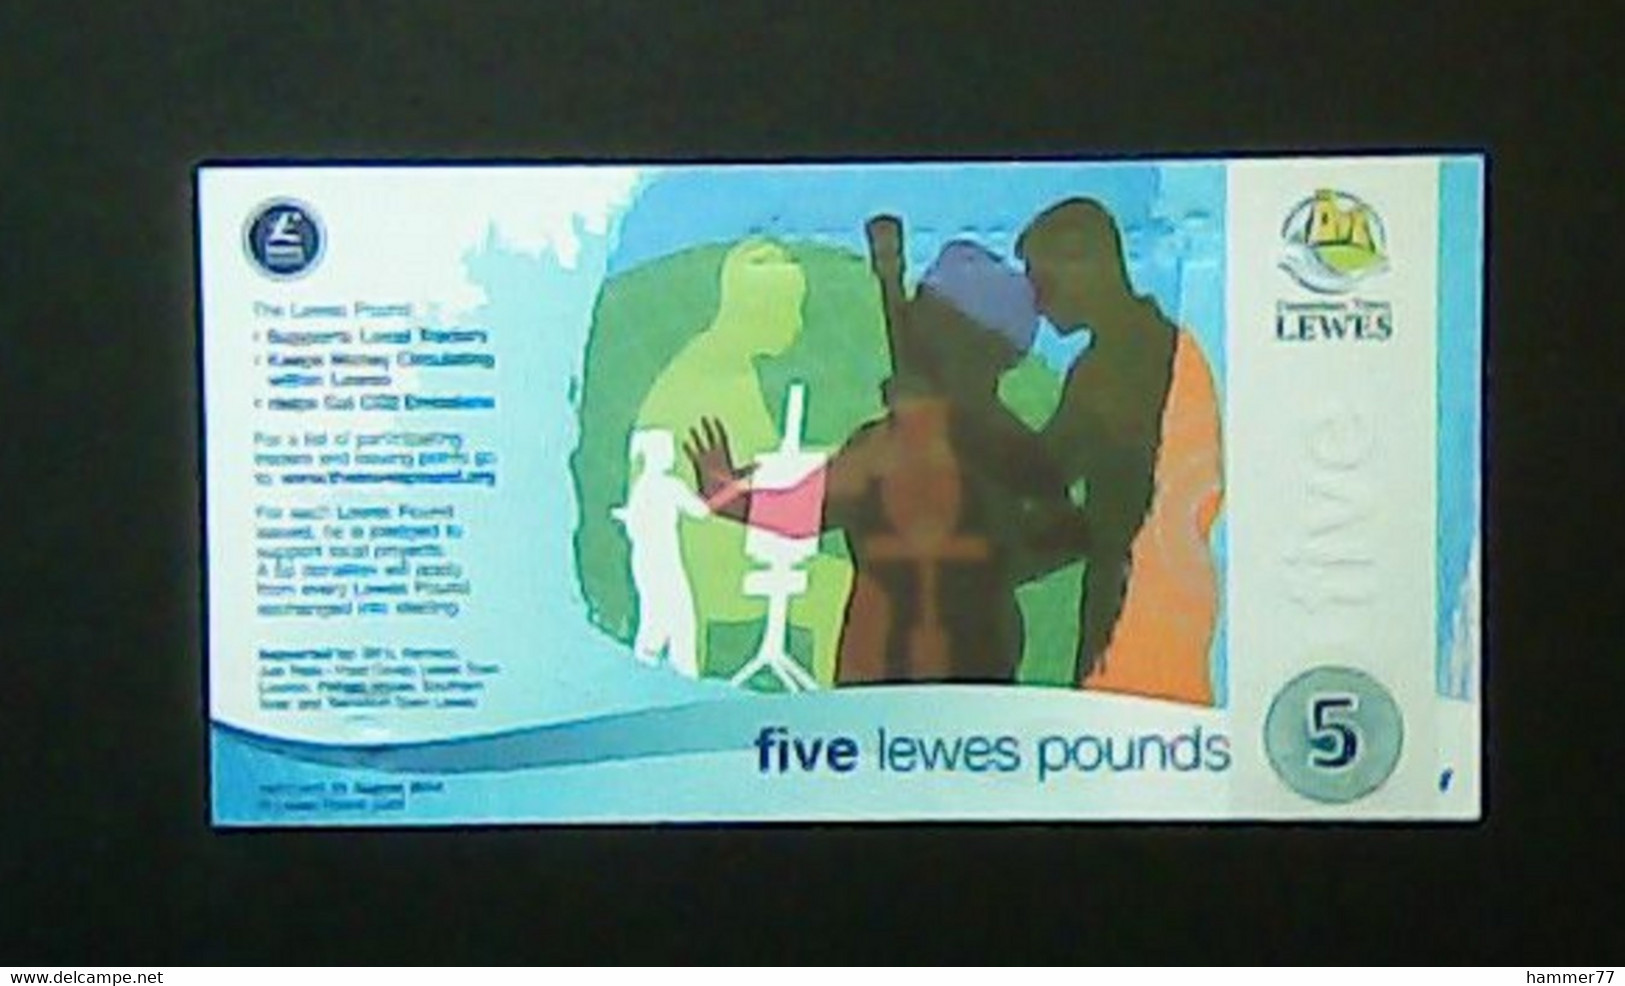 United Kingdom England 2009: Lewes 5 Pounds Unc - 5 Pounds